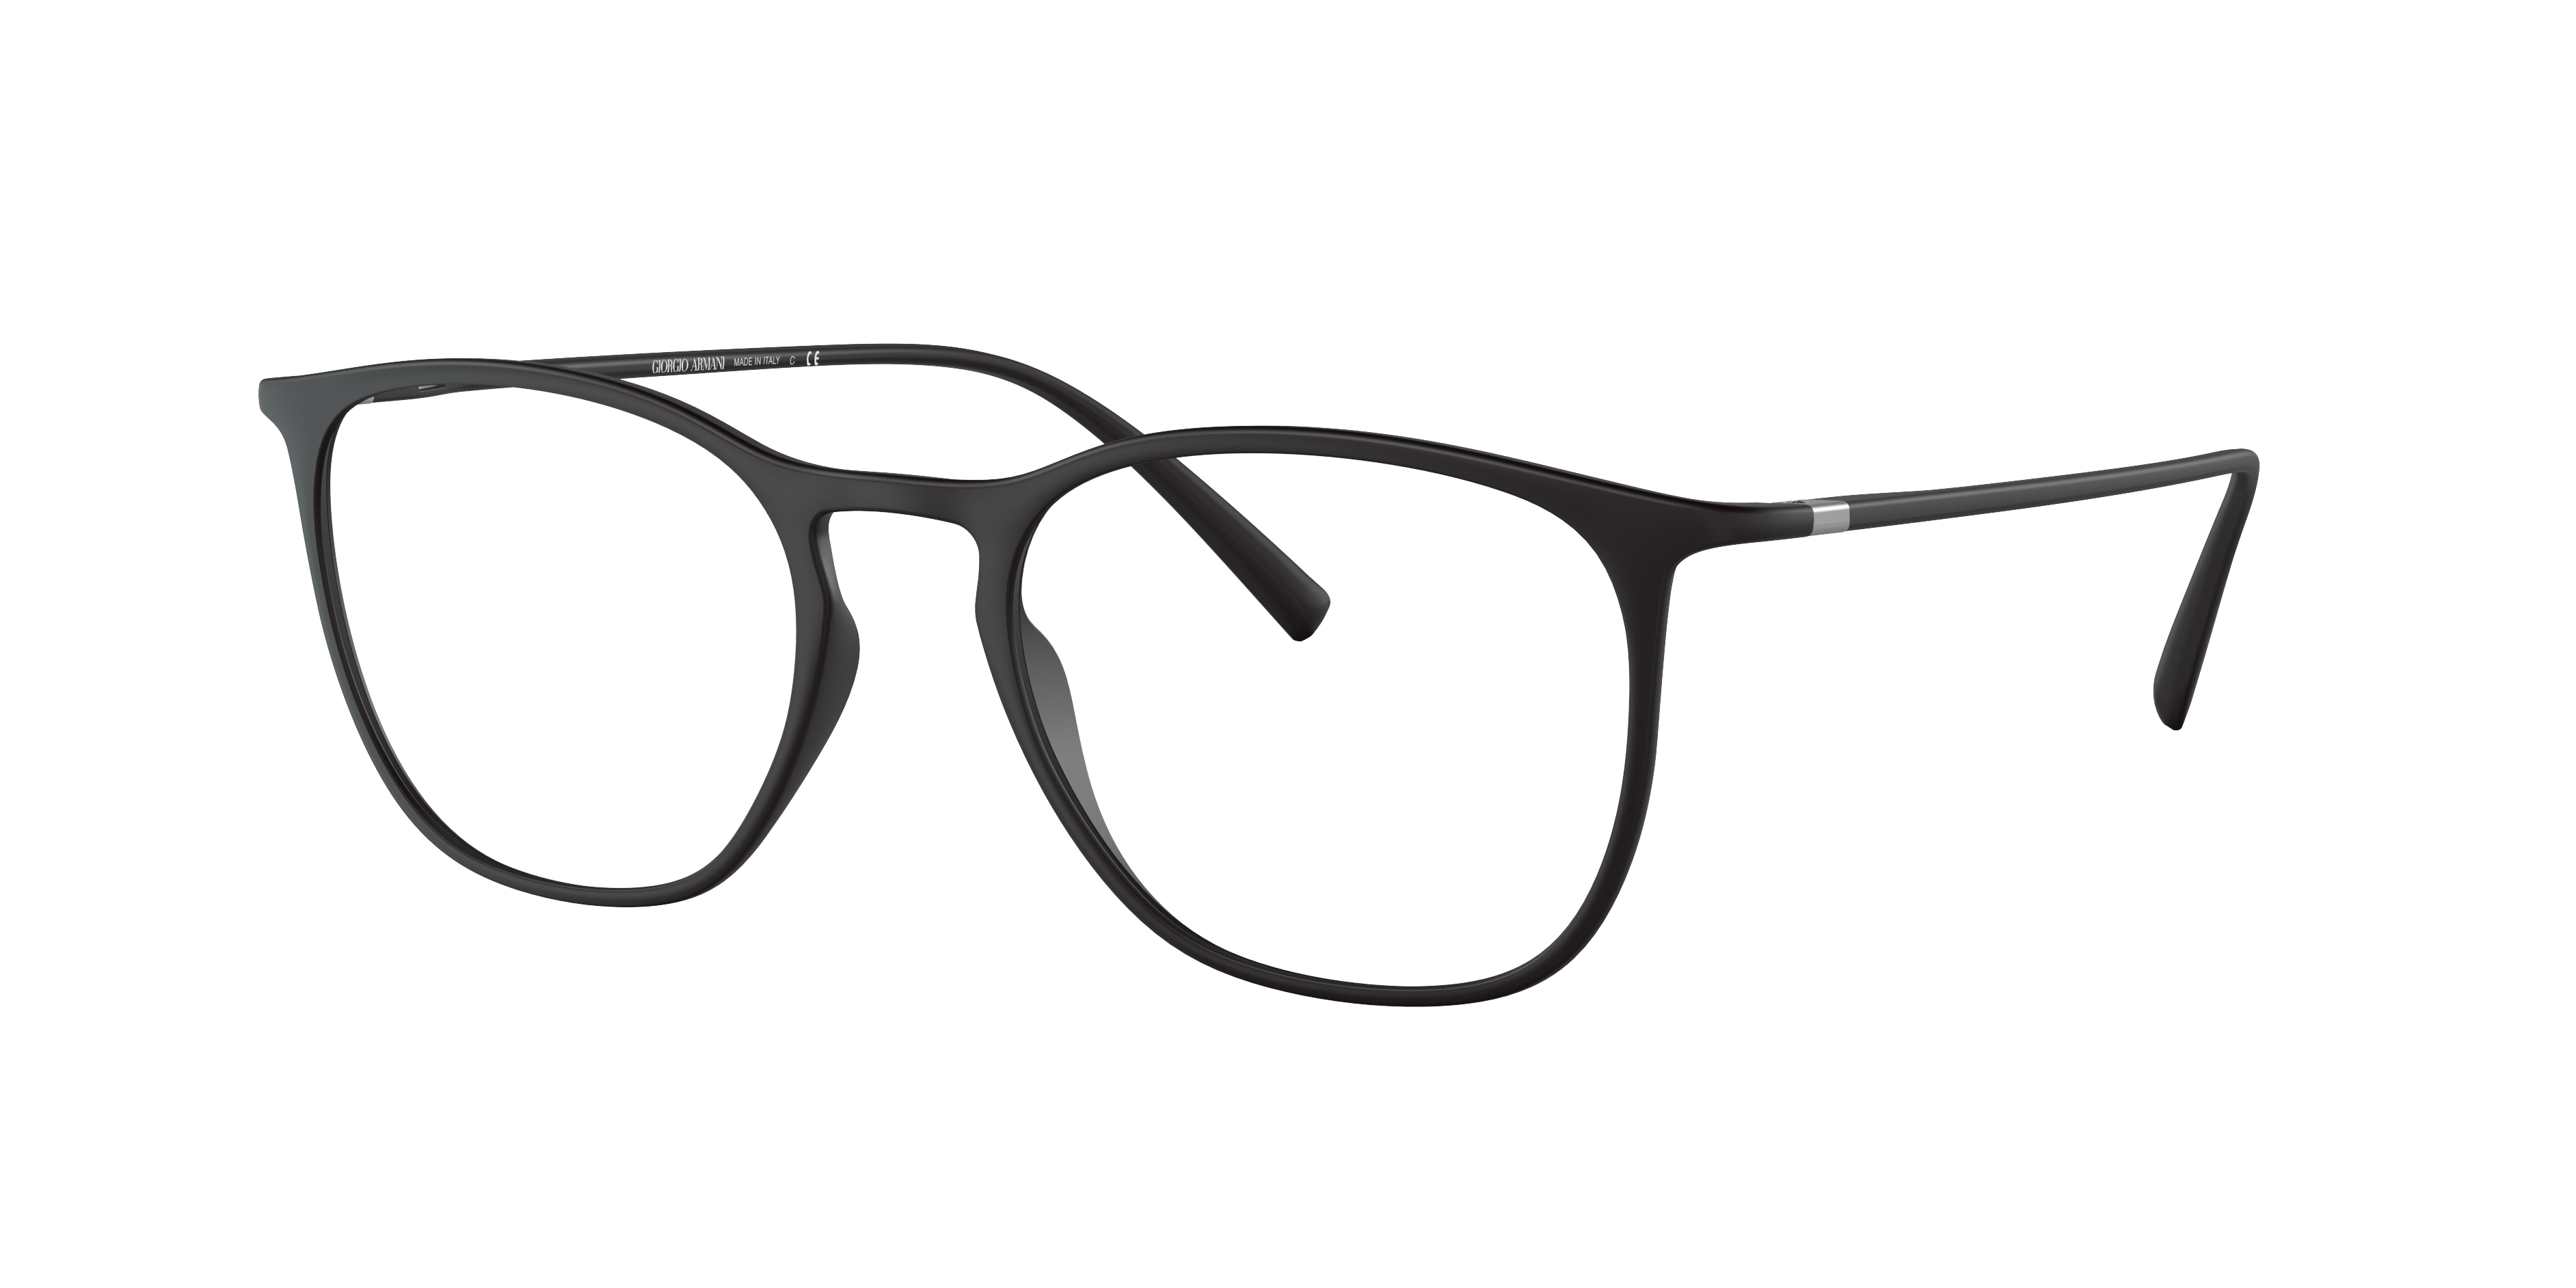 Giorgio Armani - Women's Cat-Eye Eyeglasses - Dark Green - Optical Glasses  - Giorgio Armani Eyewear - Avvenice